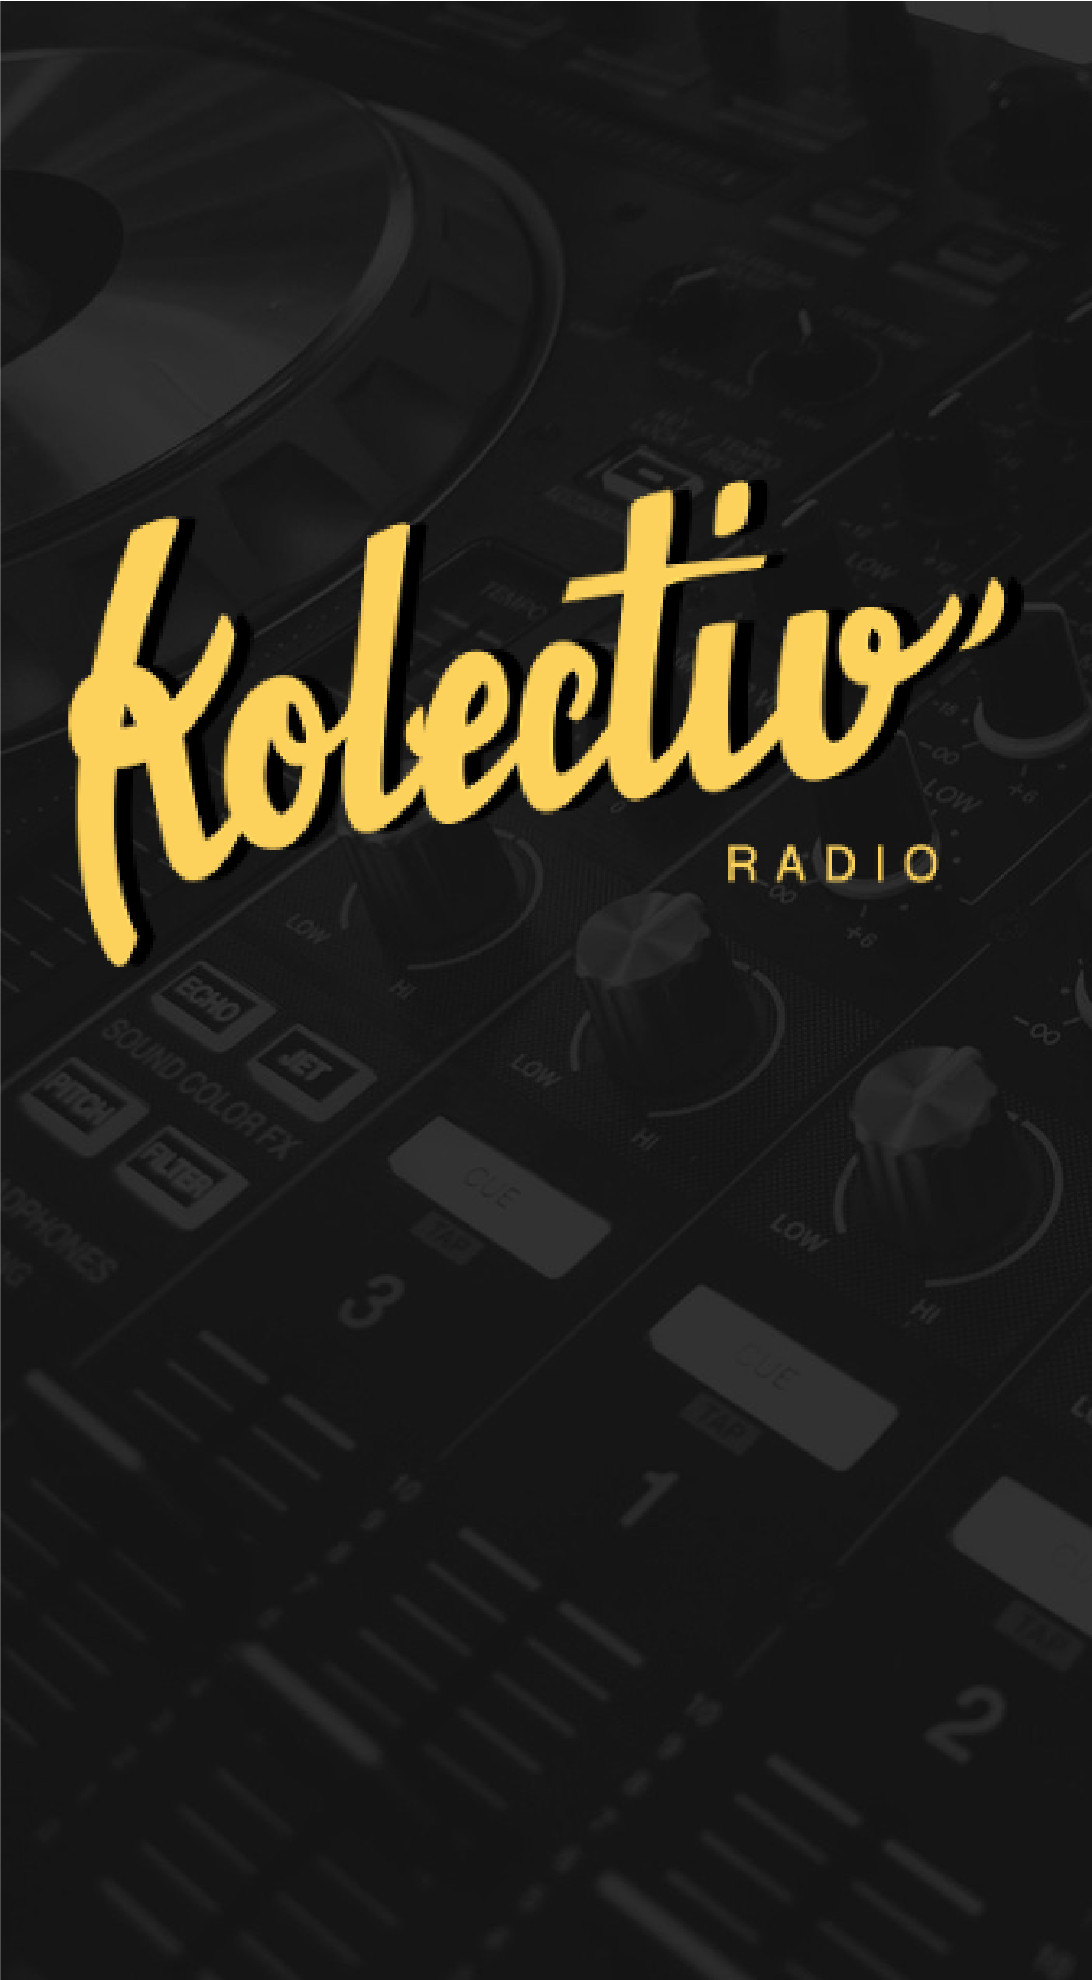 Emission de radio en direct avec Kolectiv' Radio